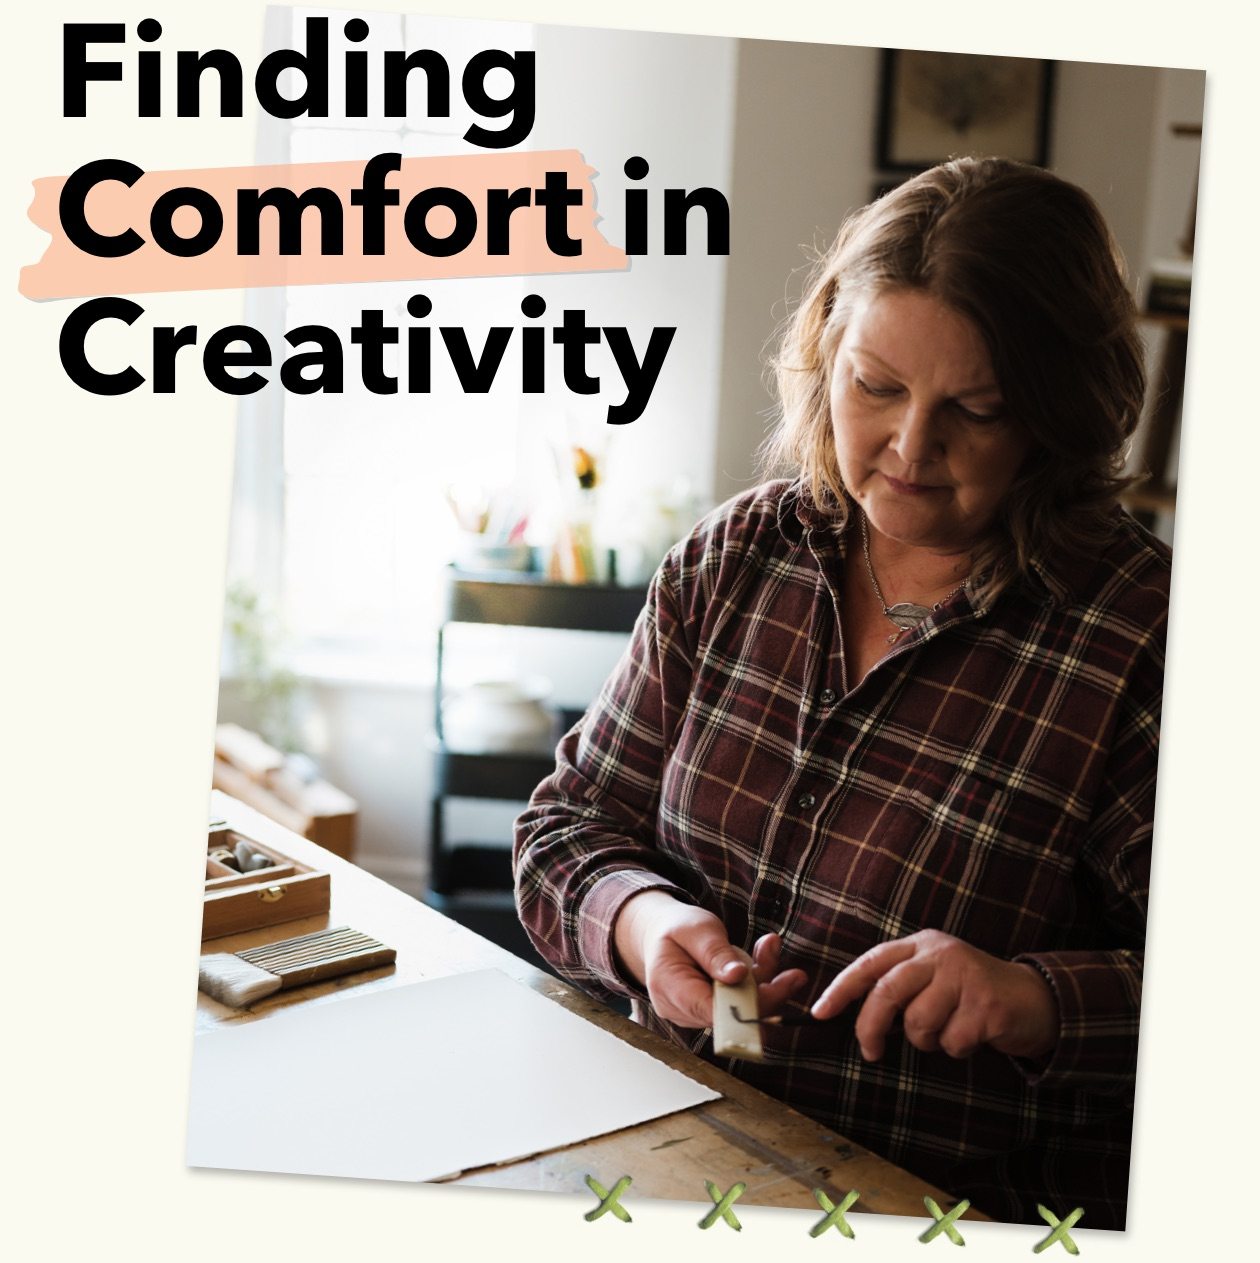 Finding Comfort in Creativity.